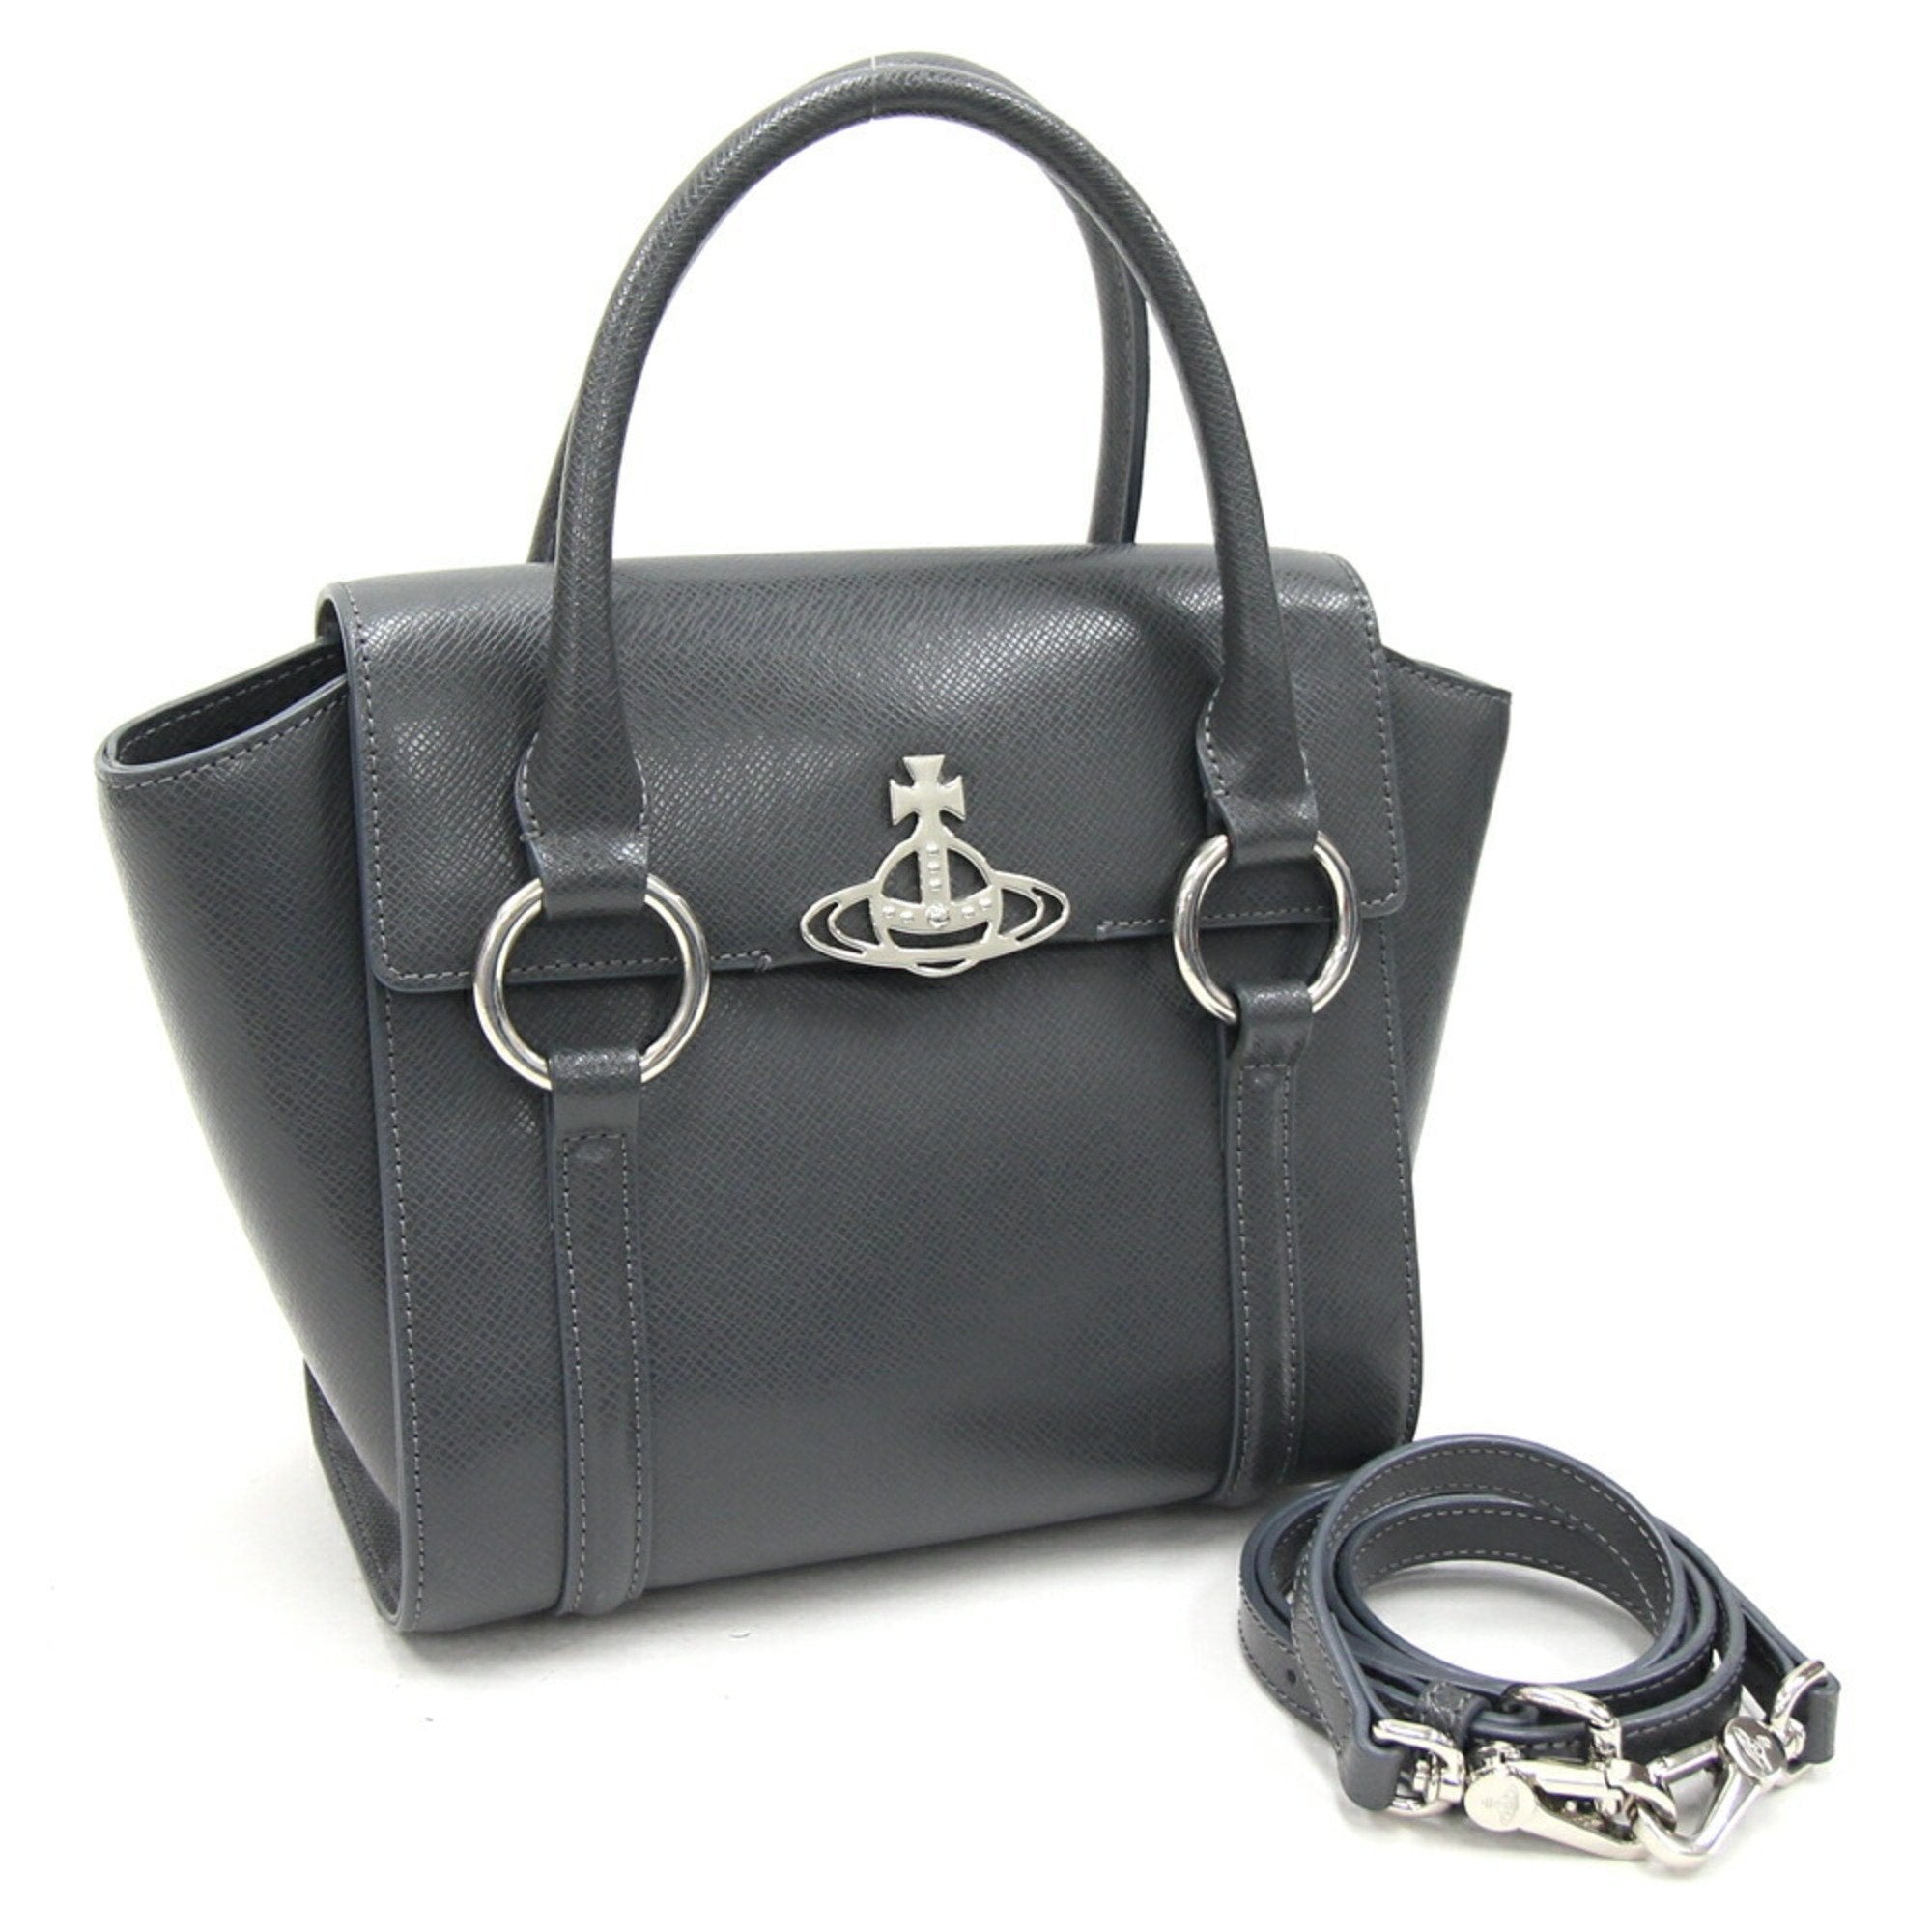 Handbag Betty Small 42010032 Dark Gray Leather Shoulder Bag Women's